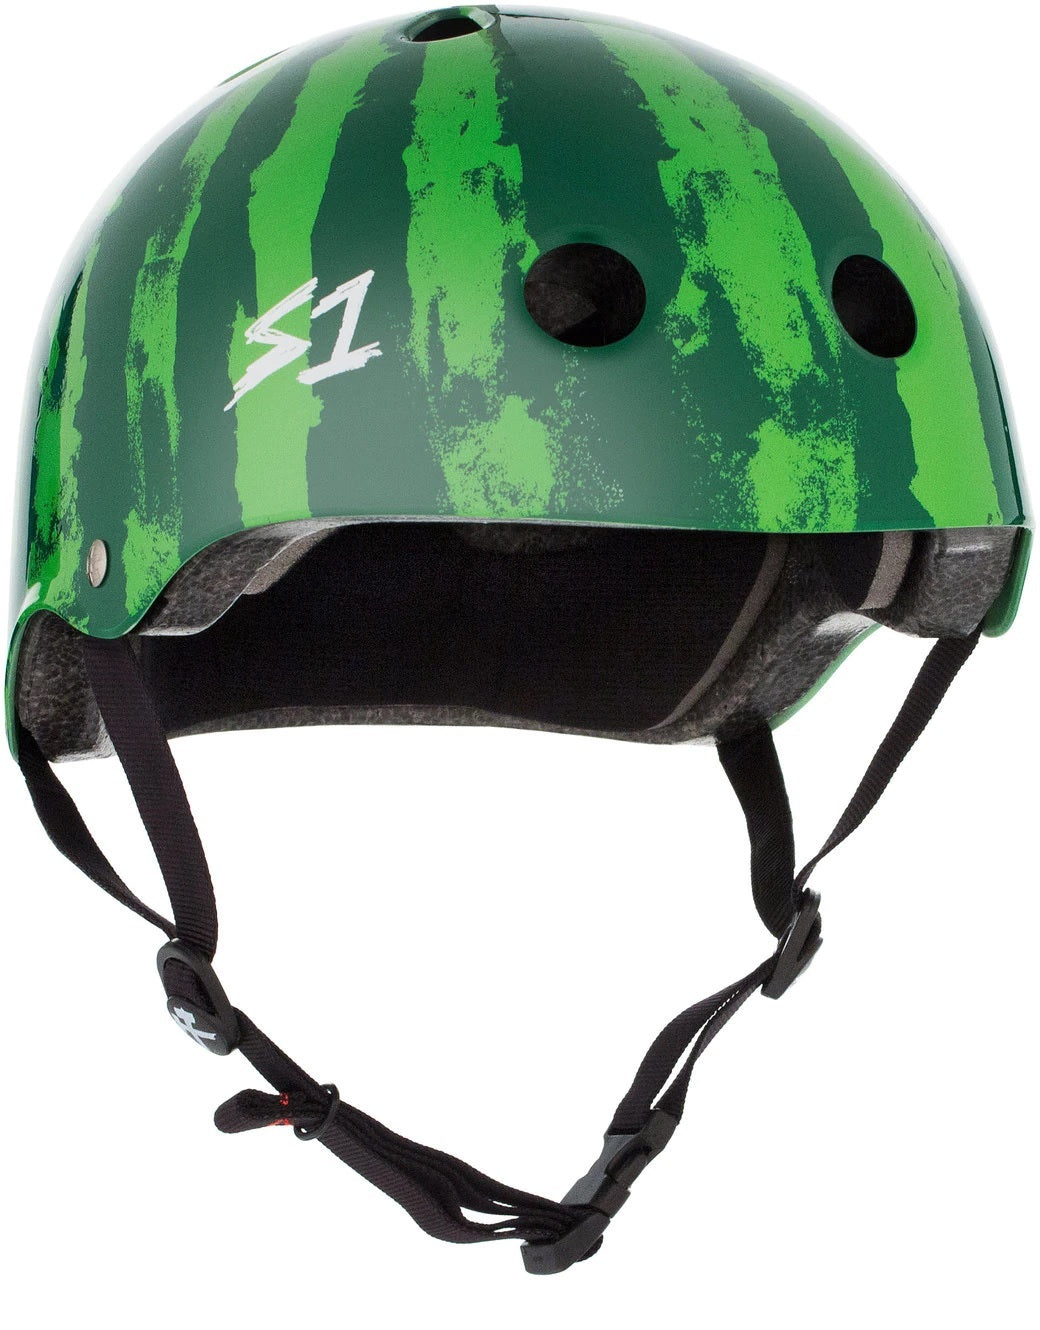 S1 Lifer Helmet in Watermelon